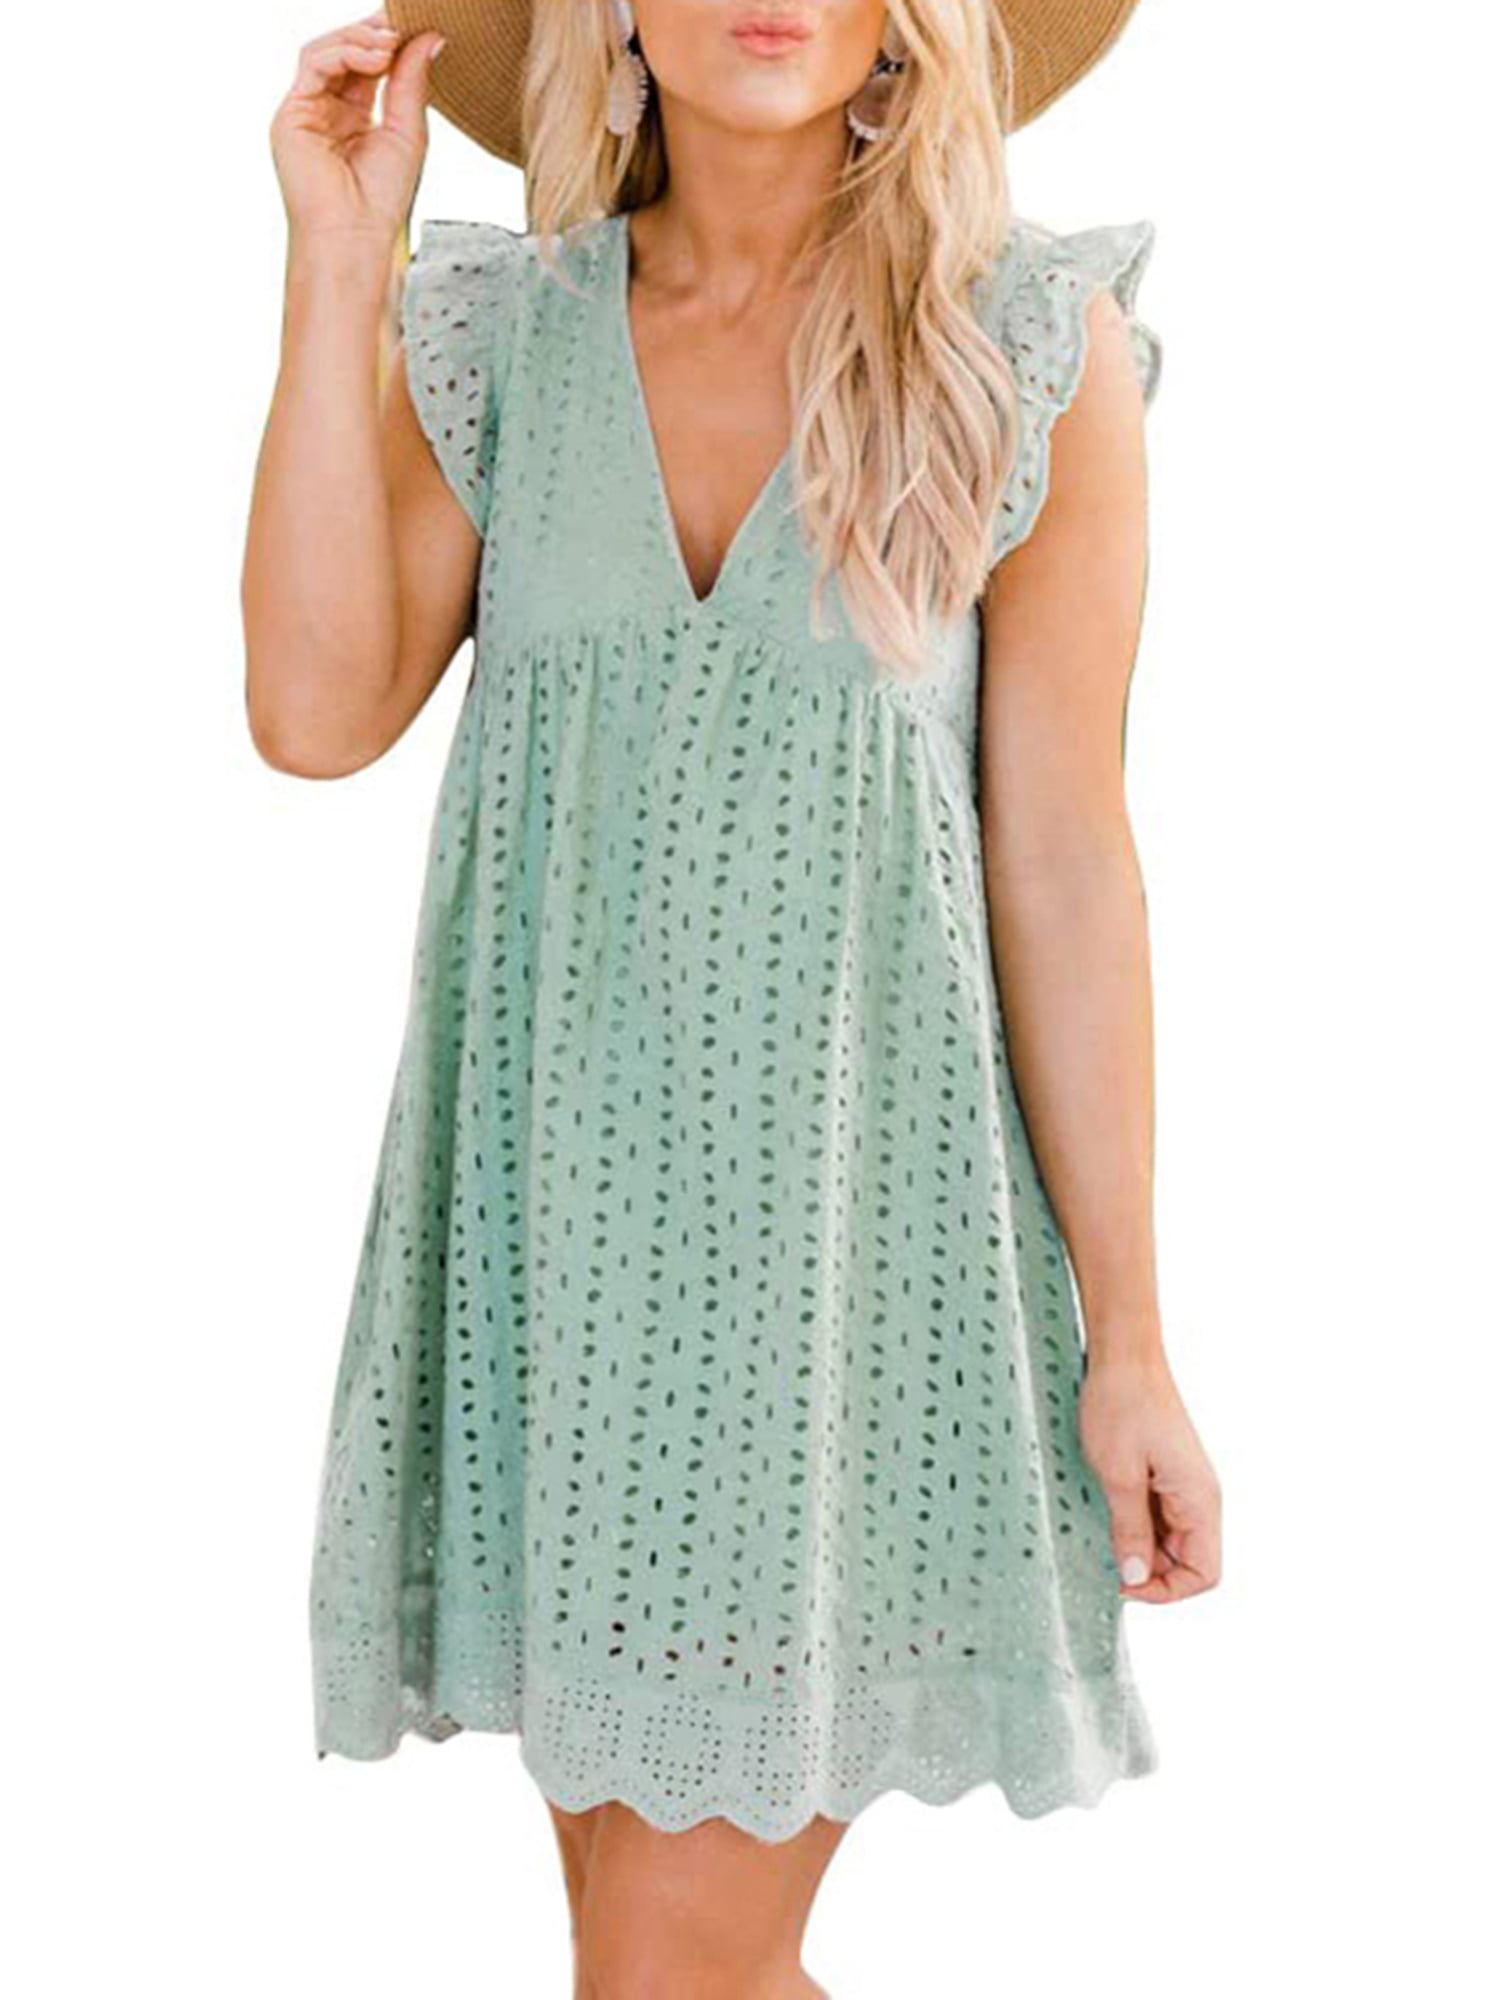 Inevnen Romper, California Romper Dress with Shorts, Summer V-Neck Dress - Walmart.com